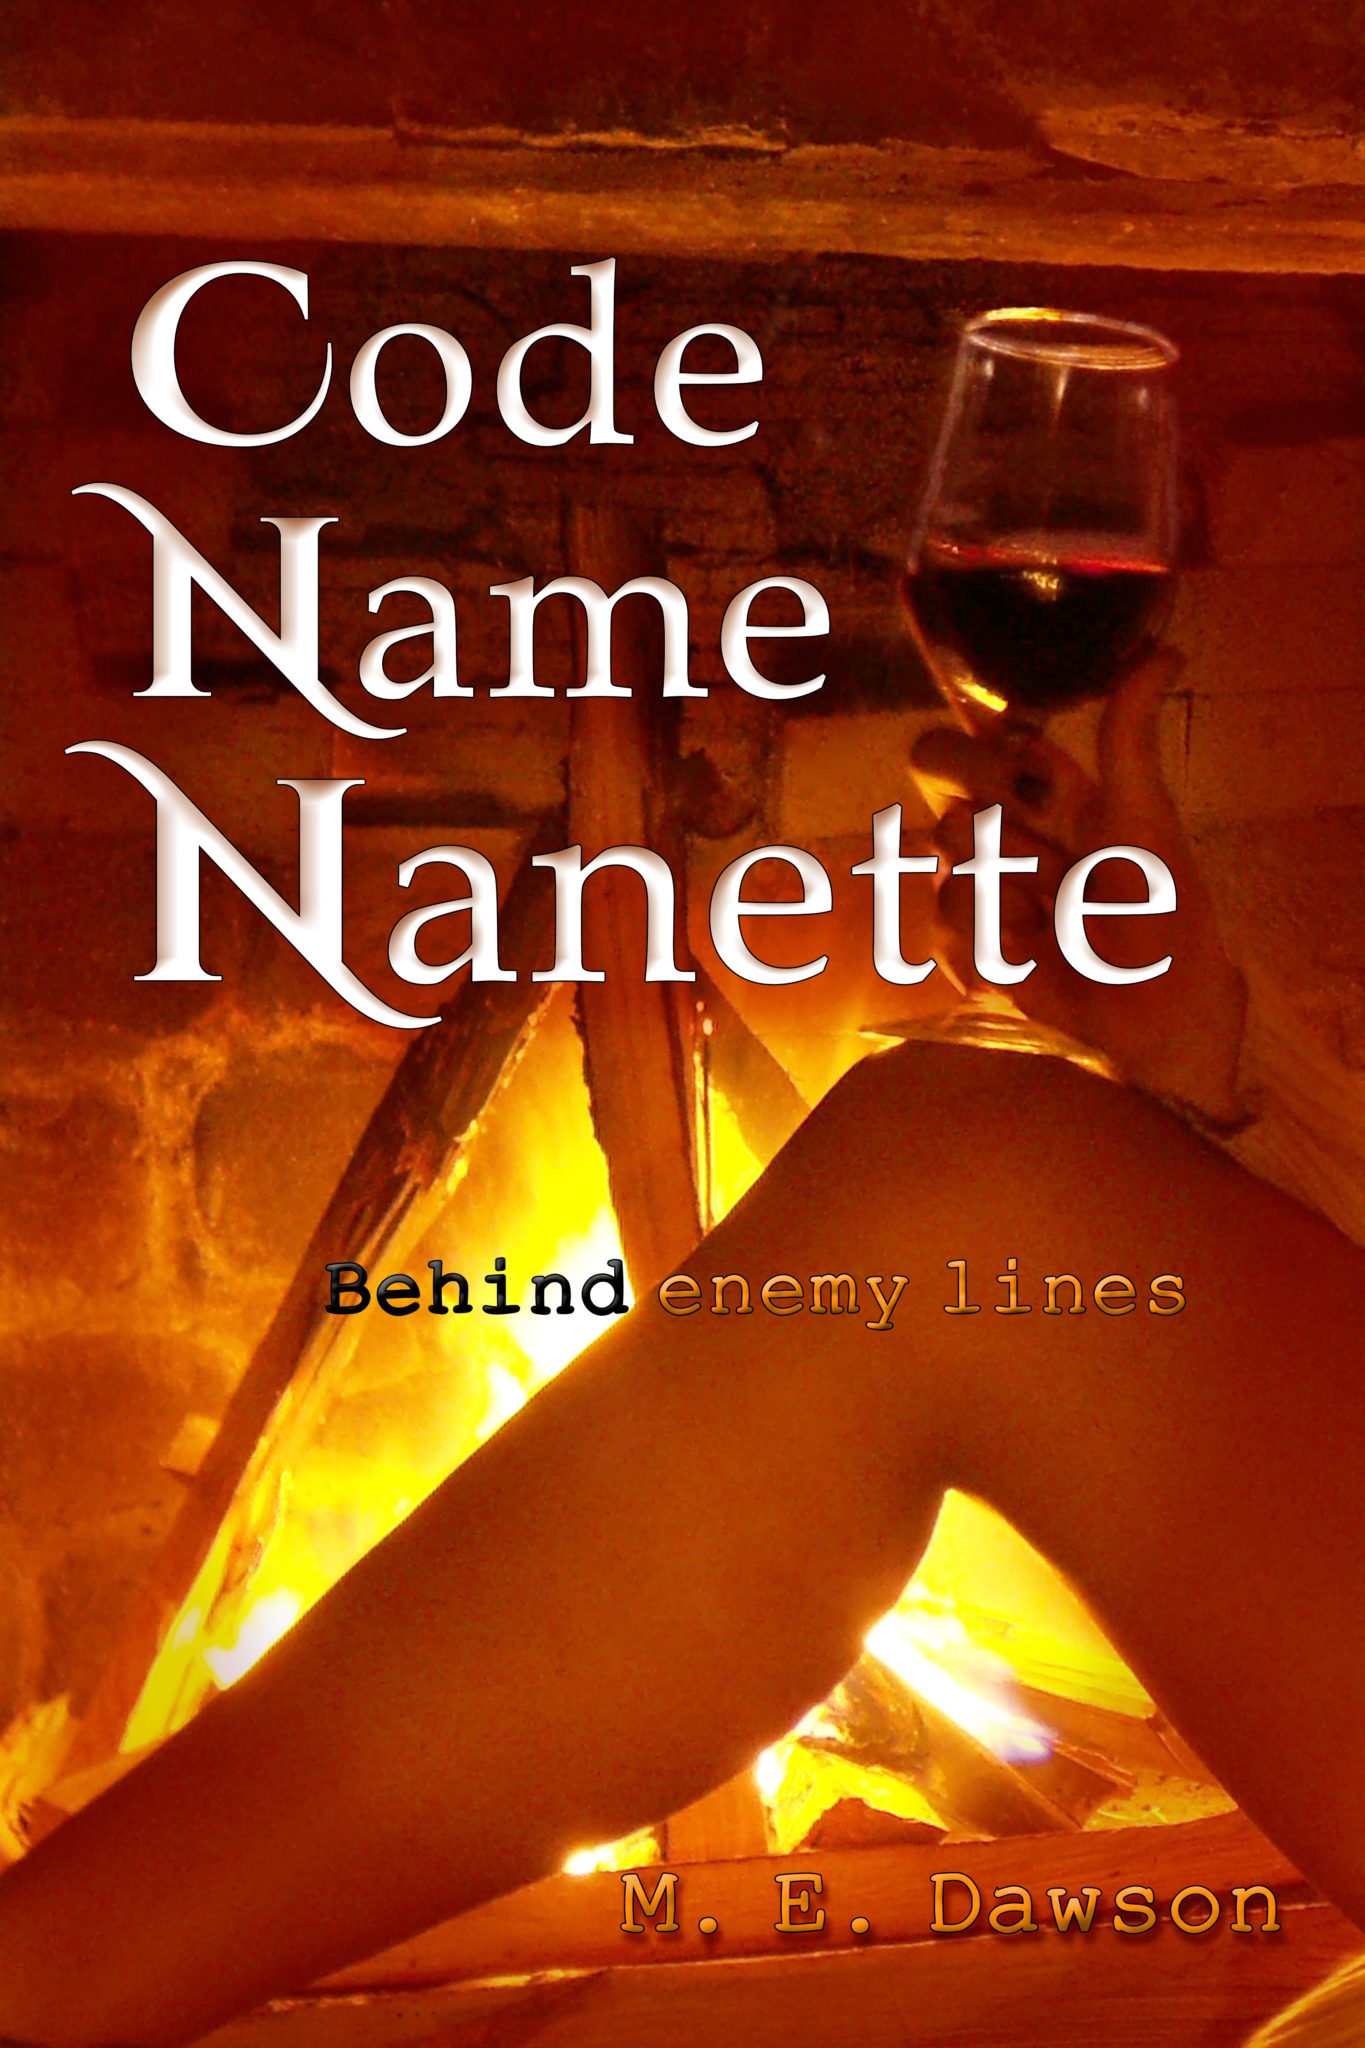 Code Name Nanette by M. E. Dawson